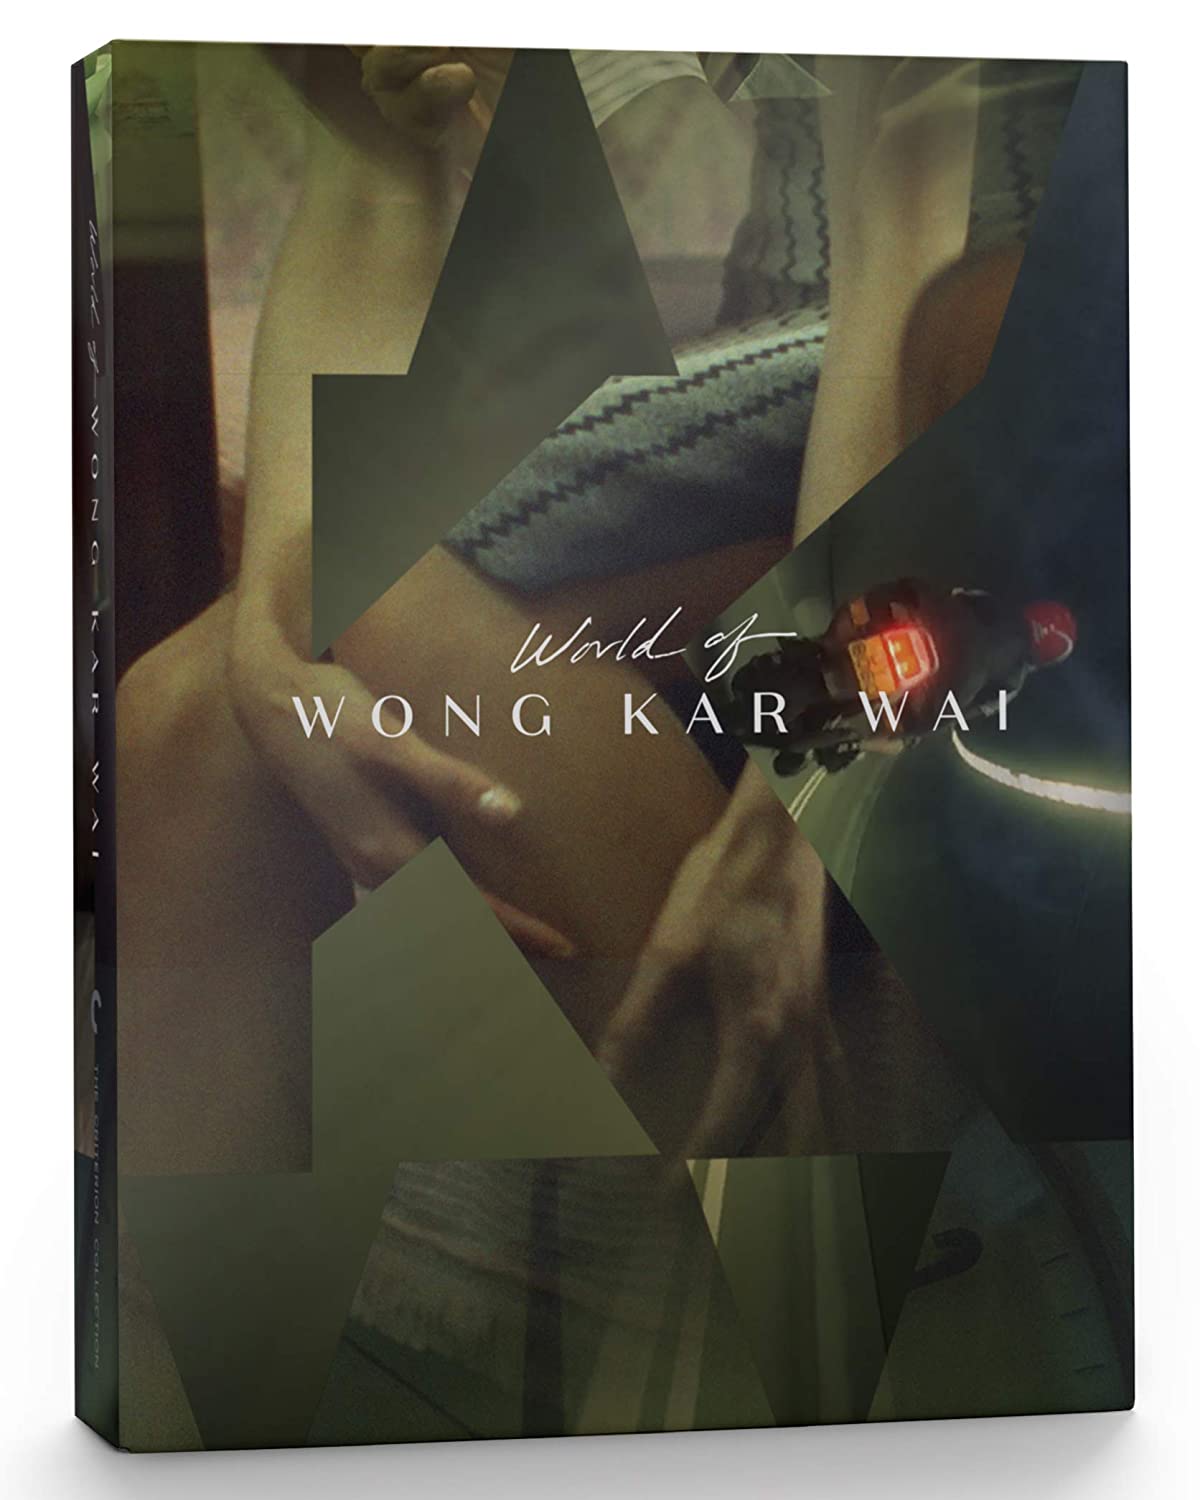 World of Wong Kar Wai (the Criterion Collection) [Blu-ray] Amazon.com $79.33